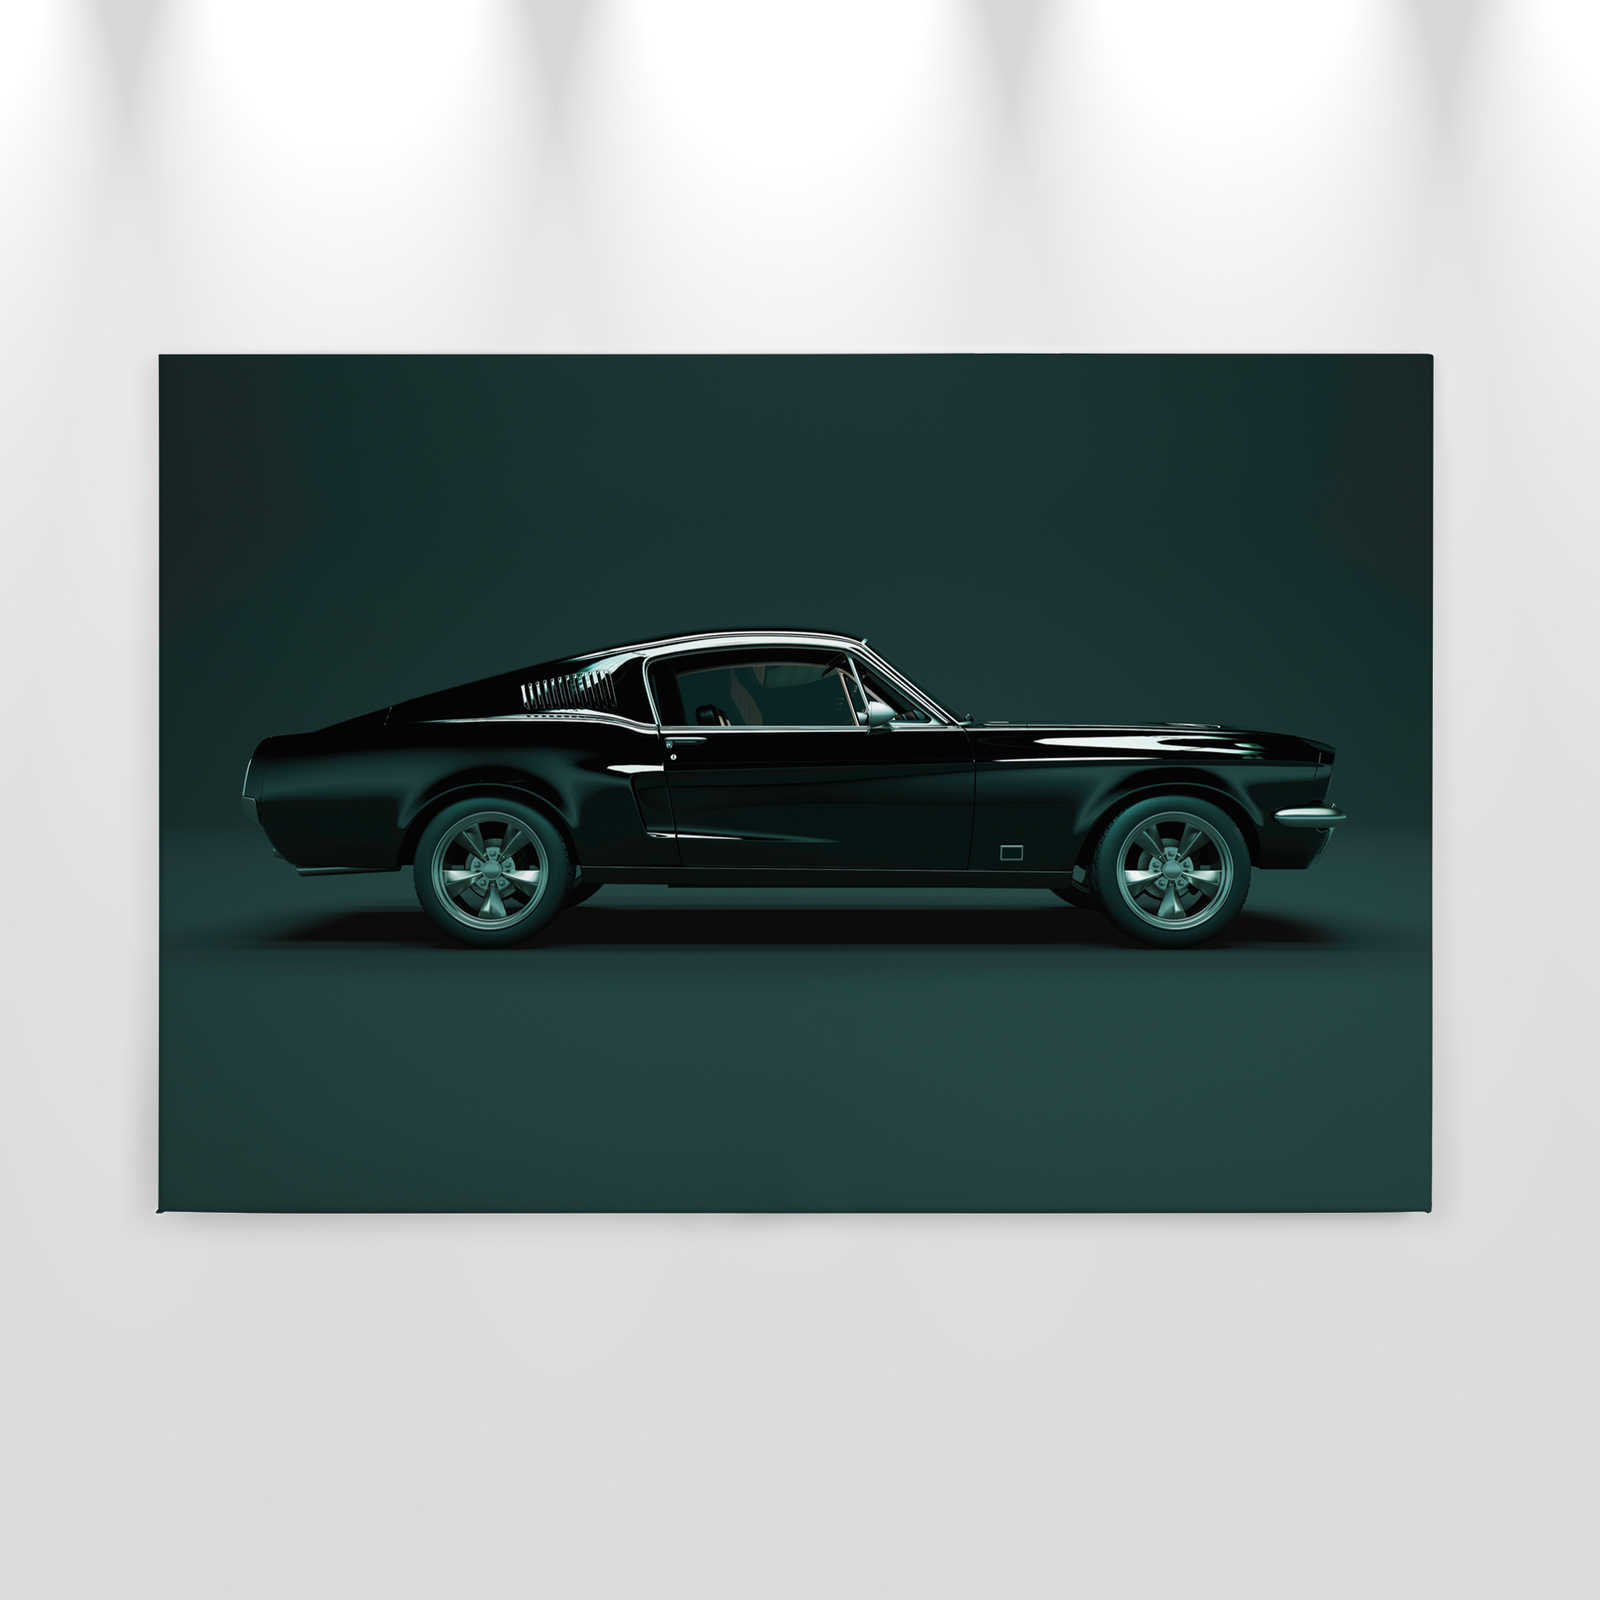             Mustang 1 - Cuadro en lienzo, vista lateral Mustang, vintage - 0,90 m x 0,60 m
        